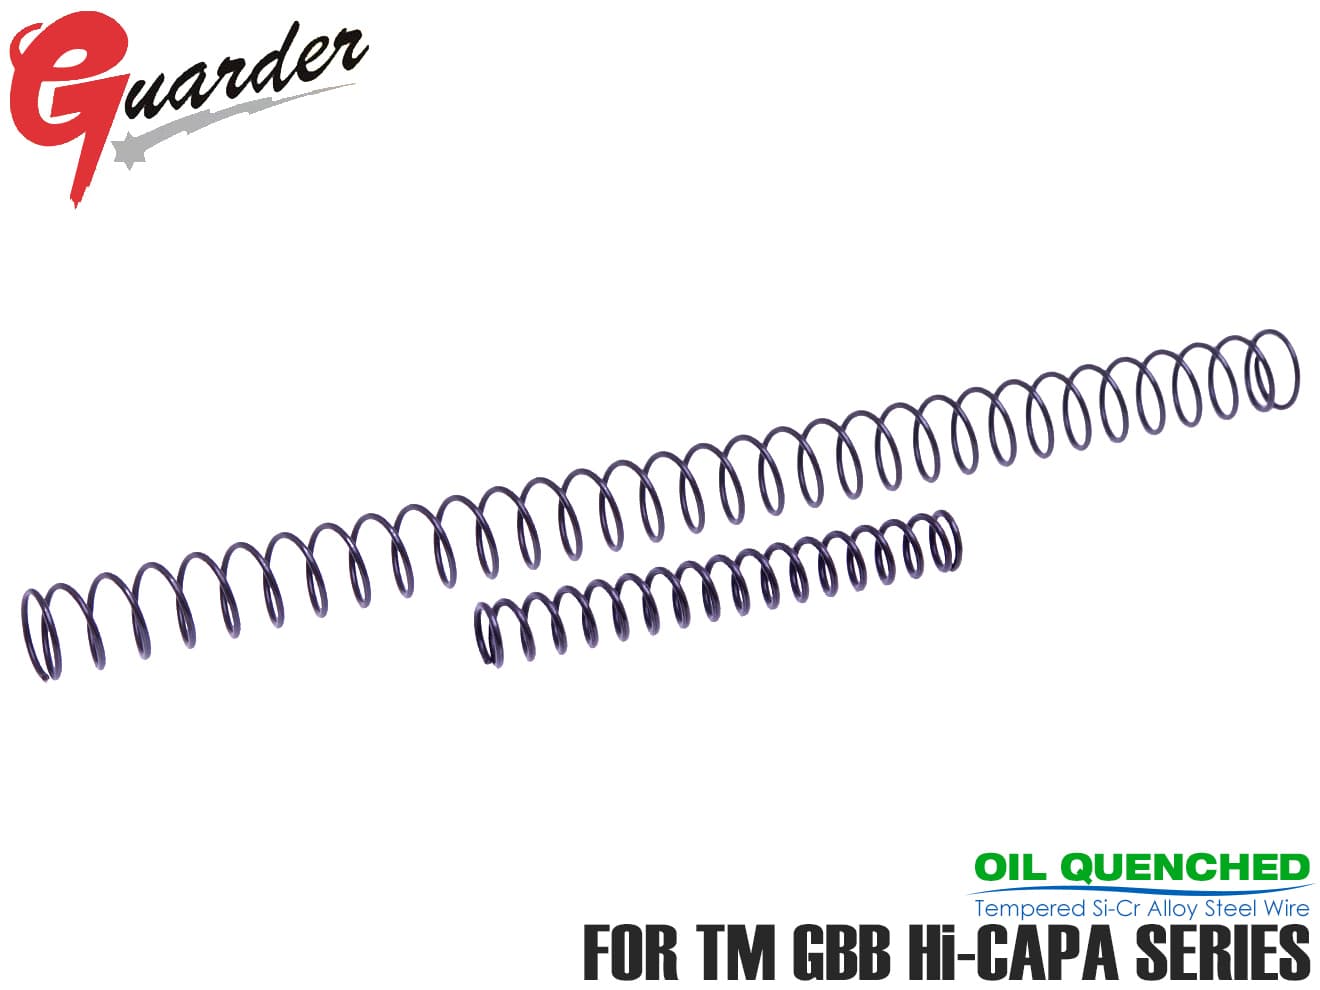 GUARDER 150% 強化リコイル/ハンマー スプリング(シリコクロム鋼) for Hi-CAPAシリーズ